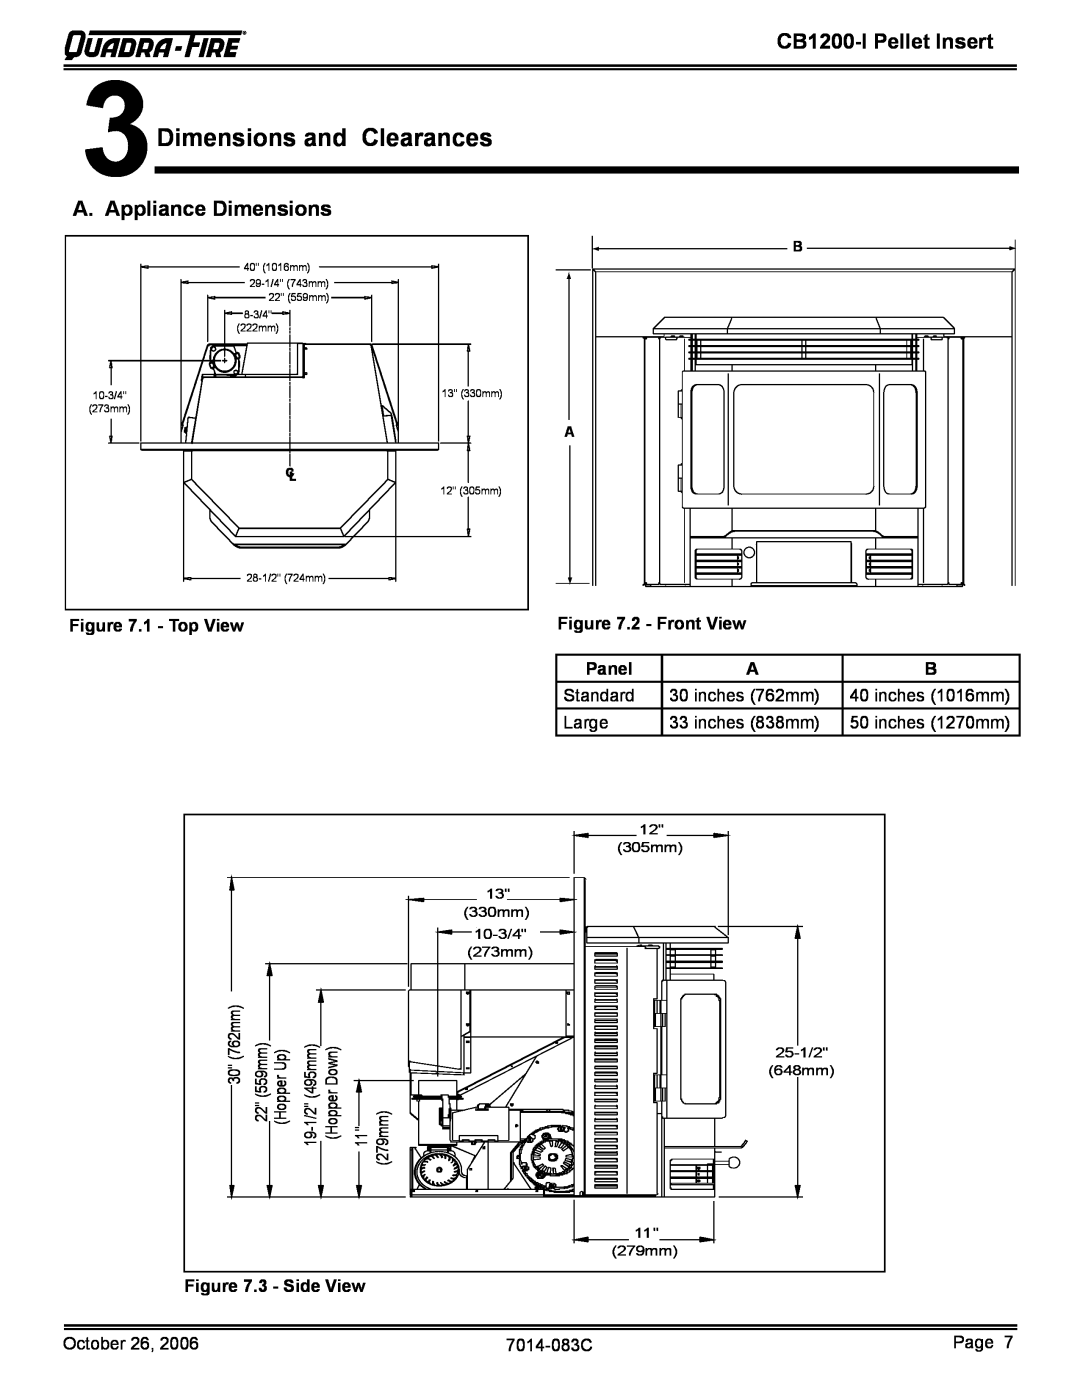 Quadra-Fire CB1200I-B owner manual Dimensions and Clearances, Appliance Dimensions, CB1200-IPellet Insert 